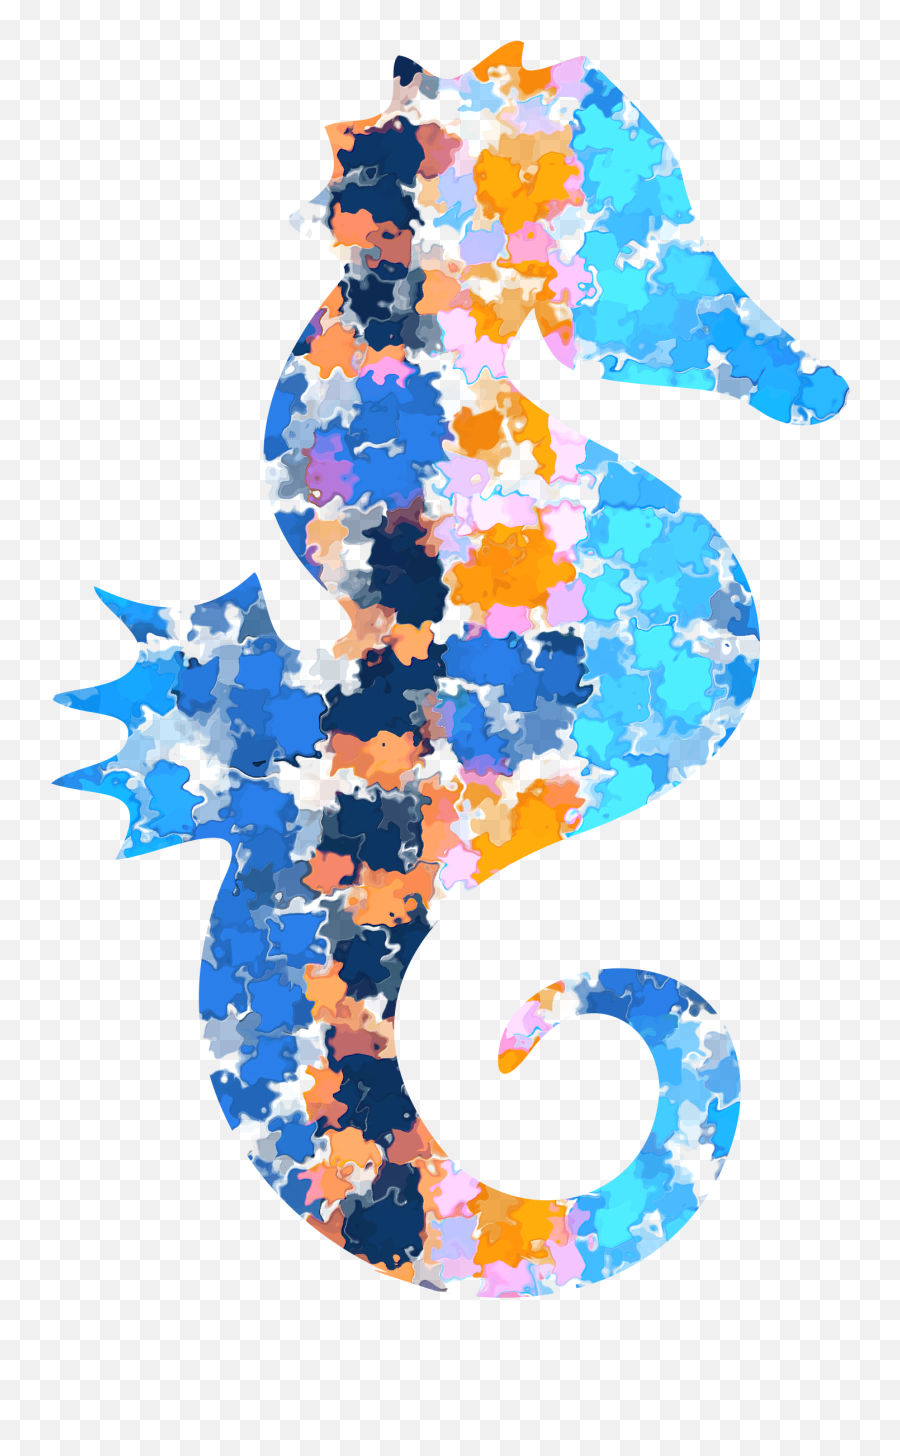 Seahorse Png - Clipart Best Clip Art,Seahorse Icon